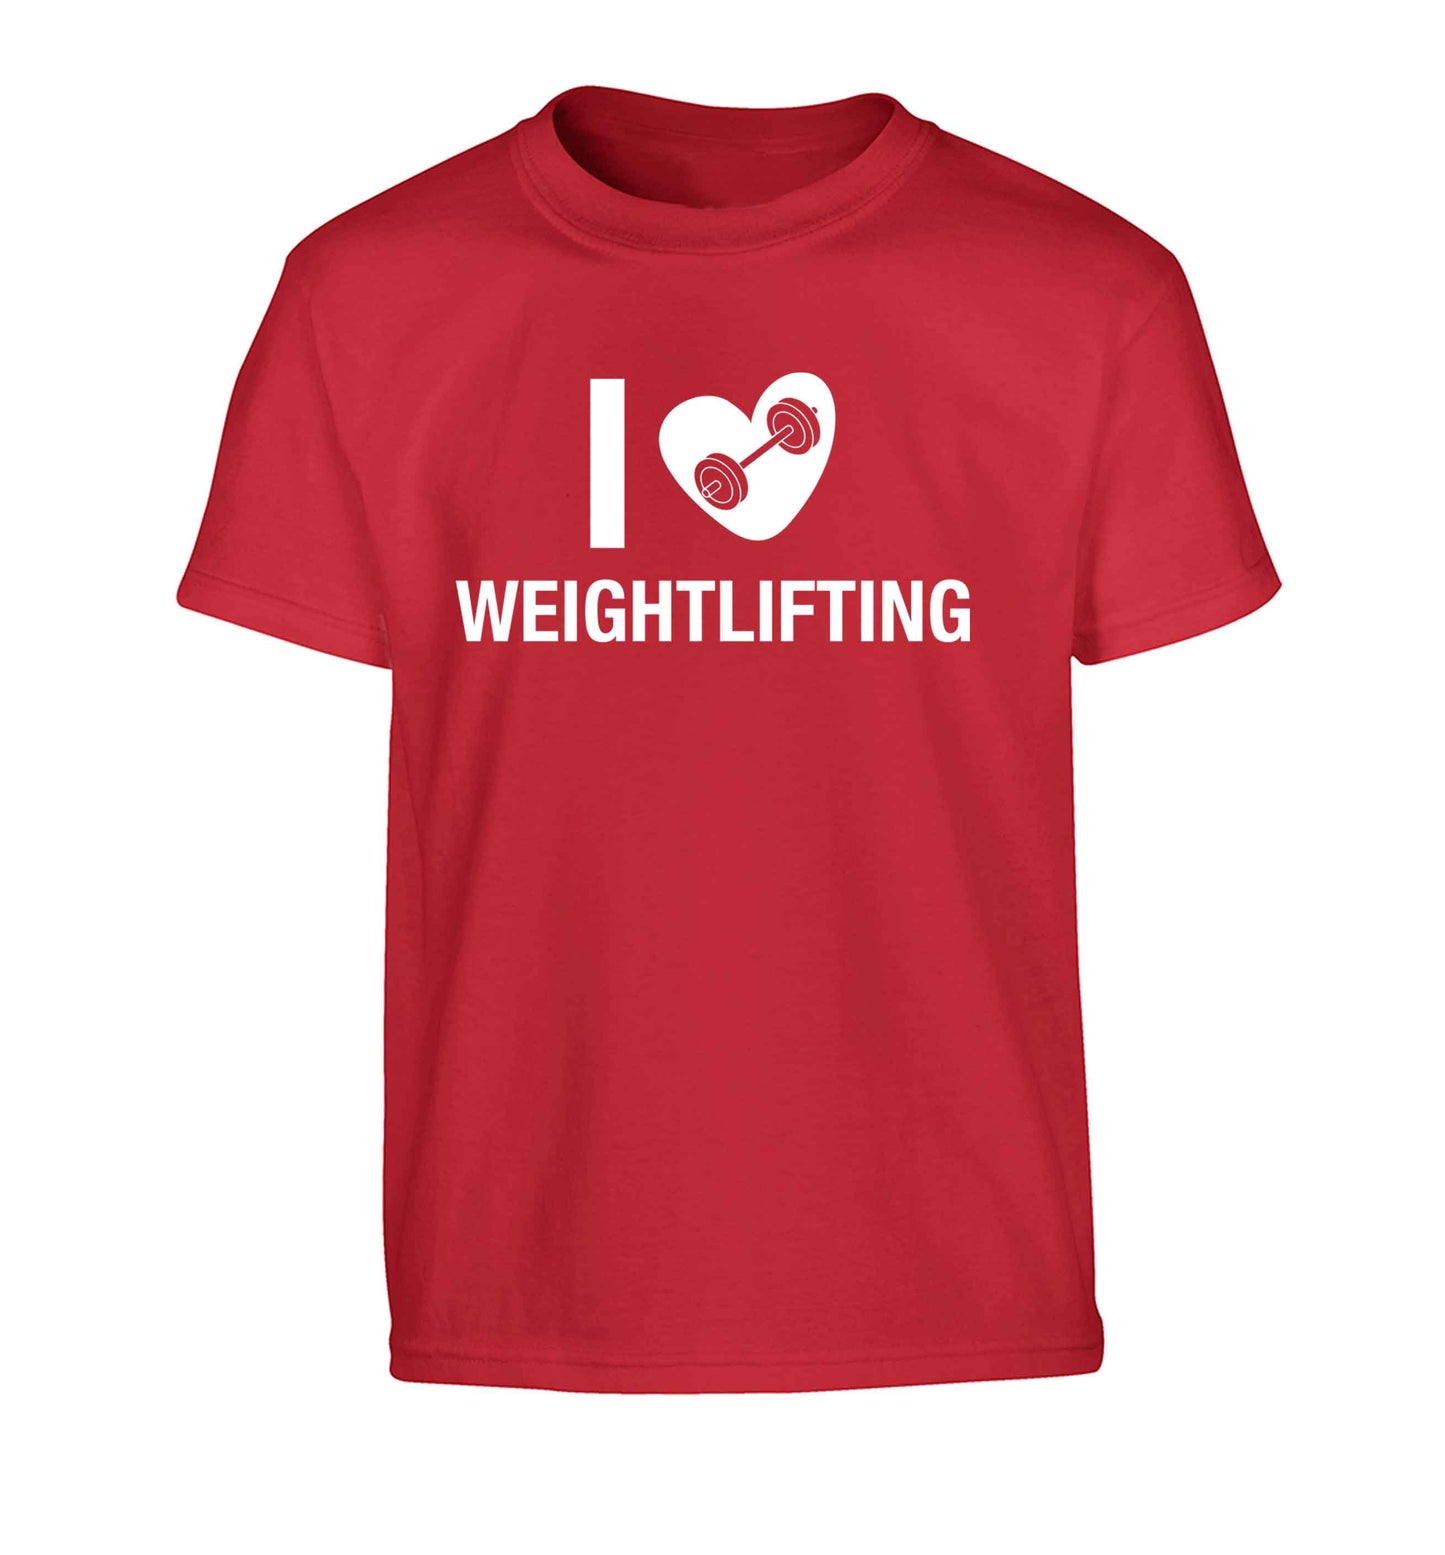 I love weightlifting Children's red Tshirt 12-13 Years